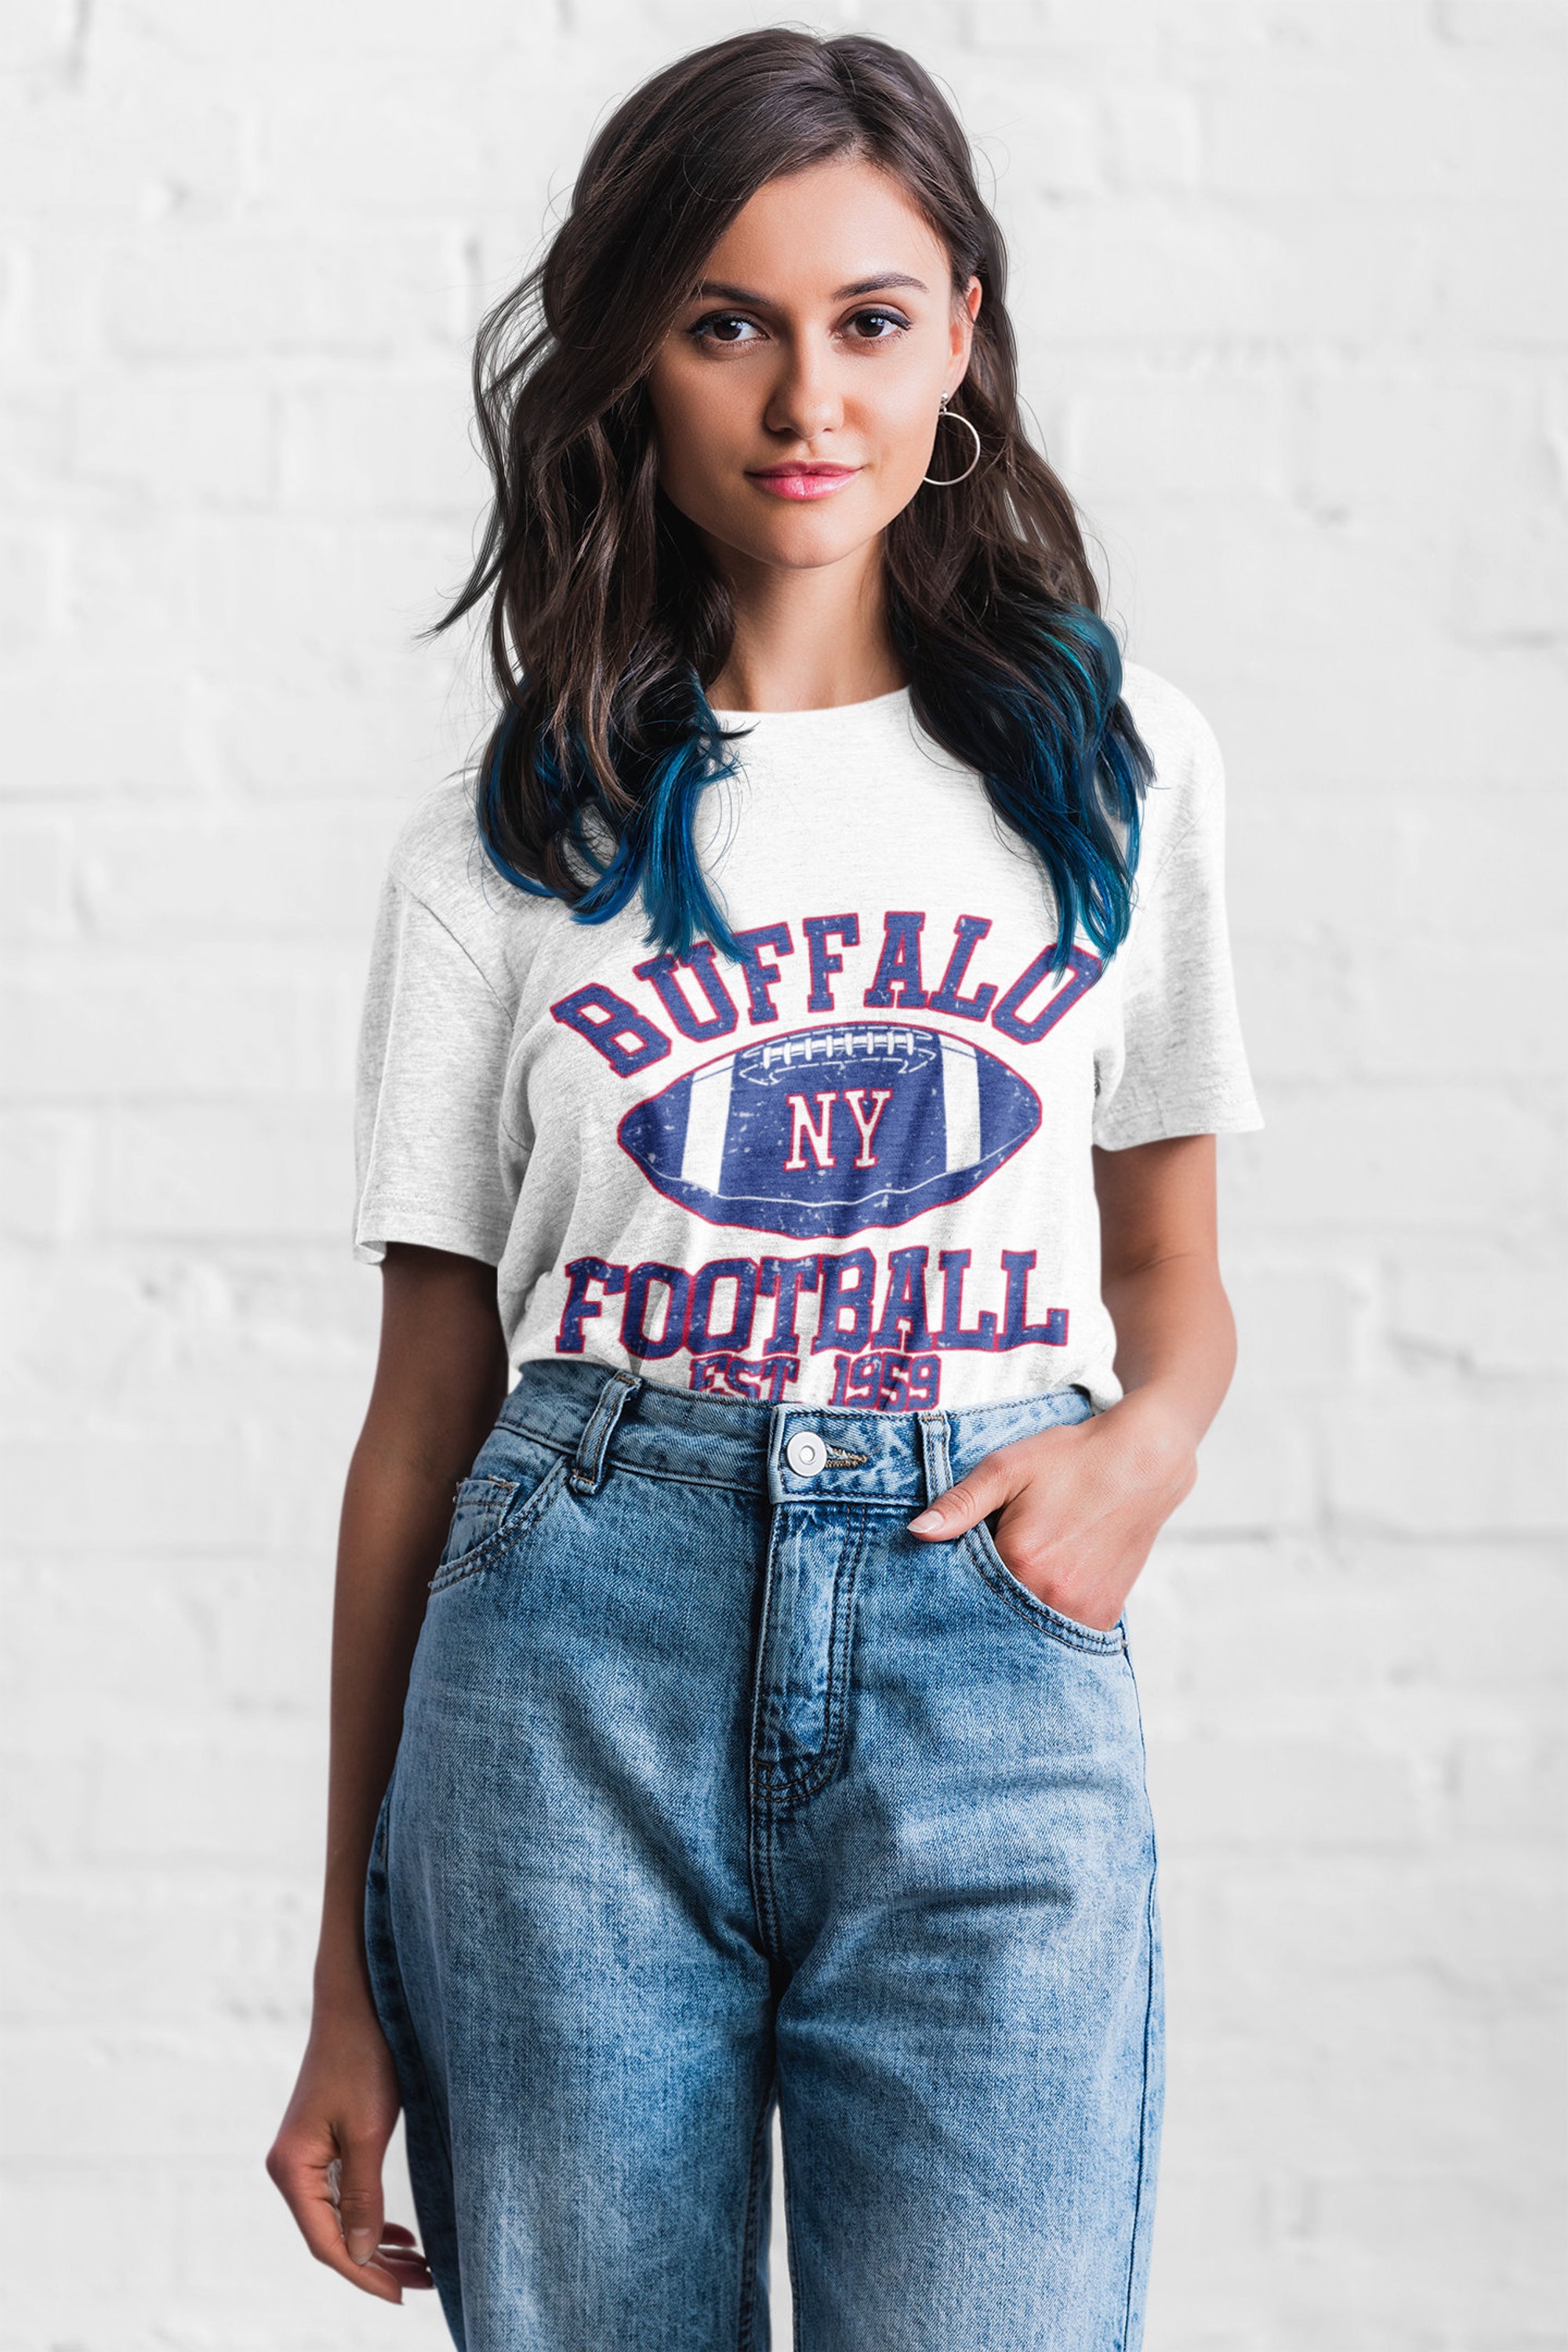 buffalo bills FOOTBALL shirt